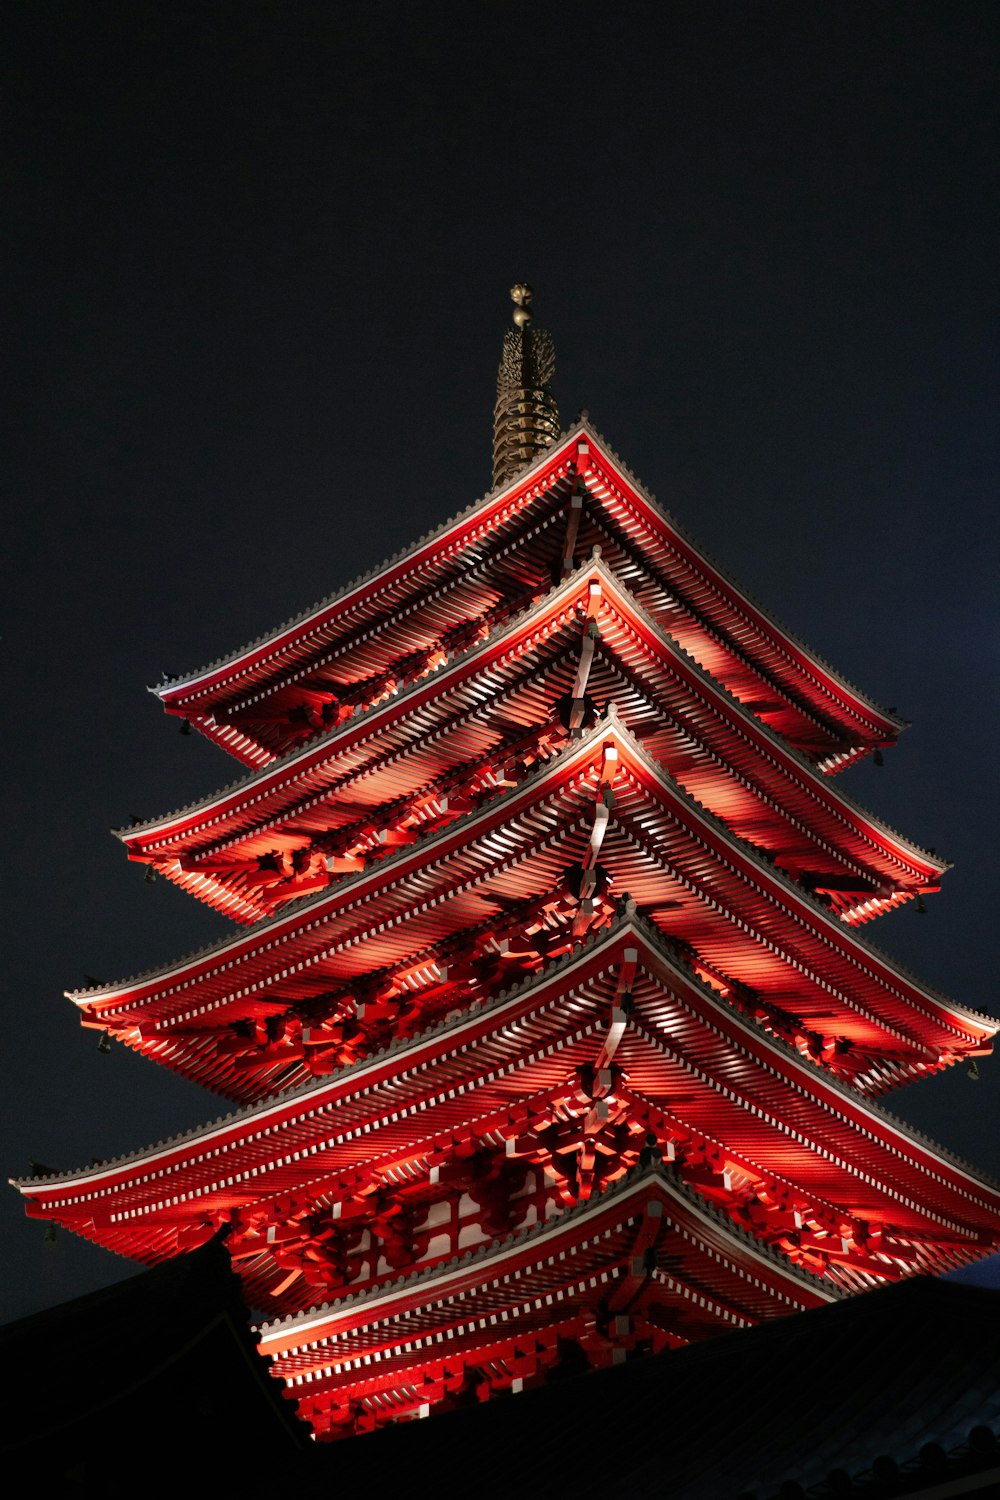 Roter Tempel in der Nacht